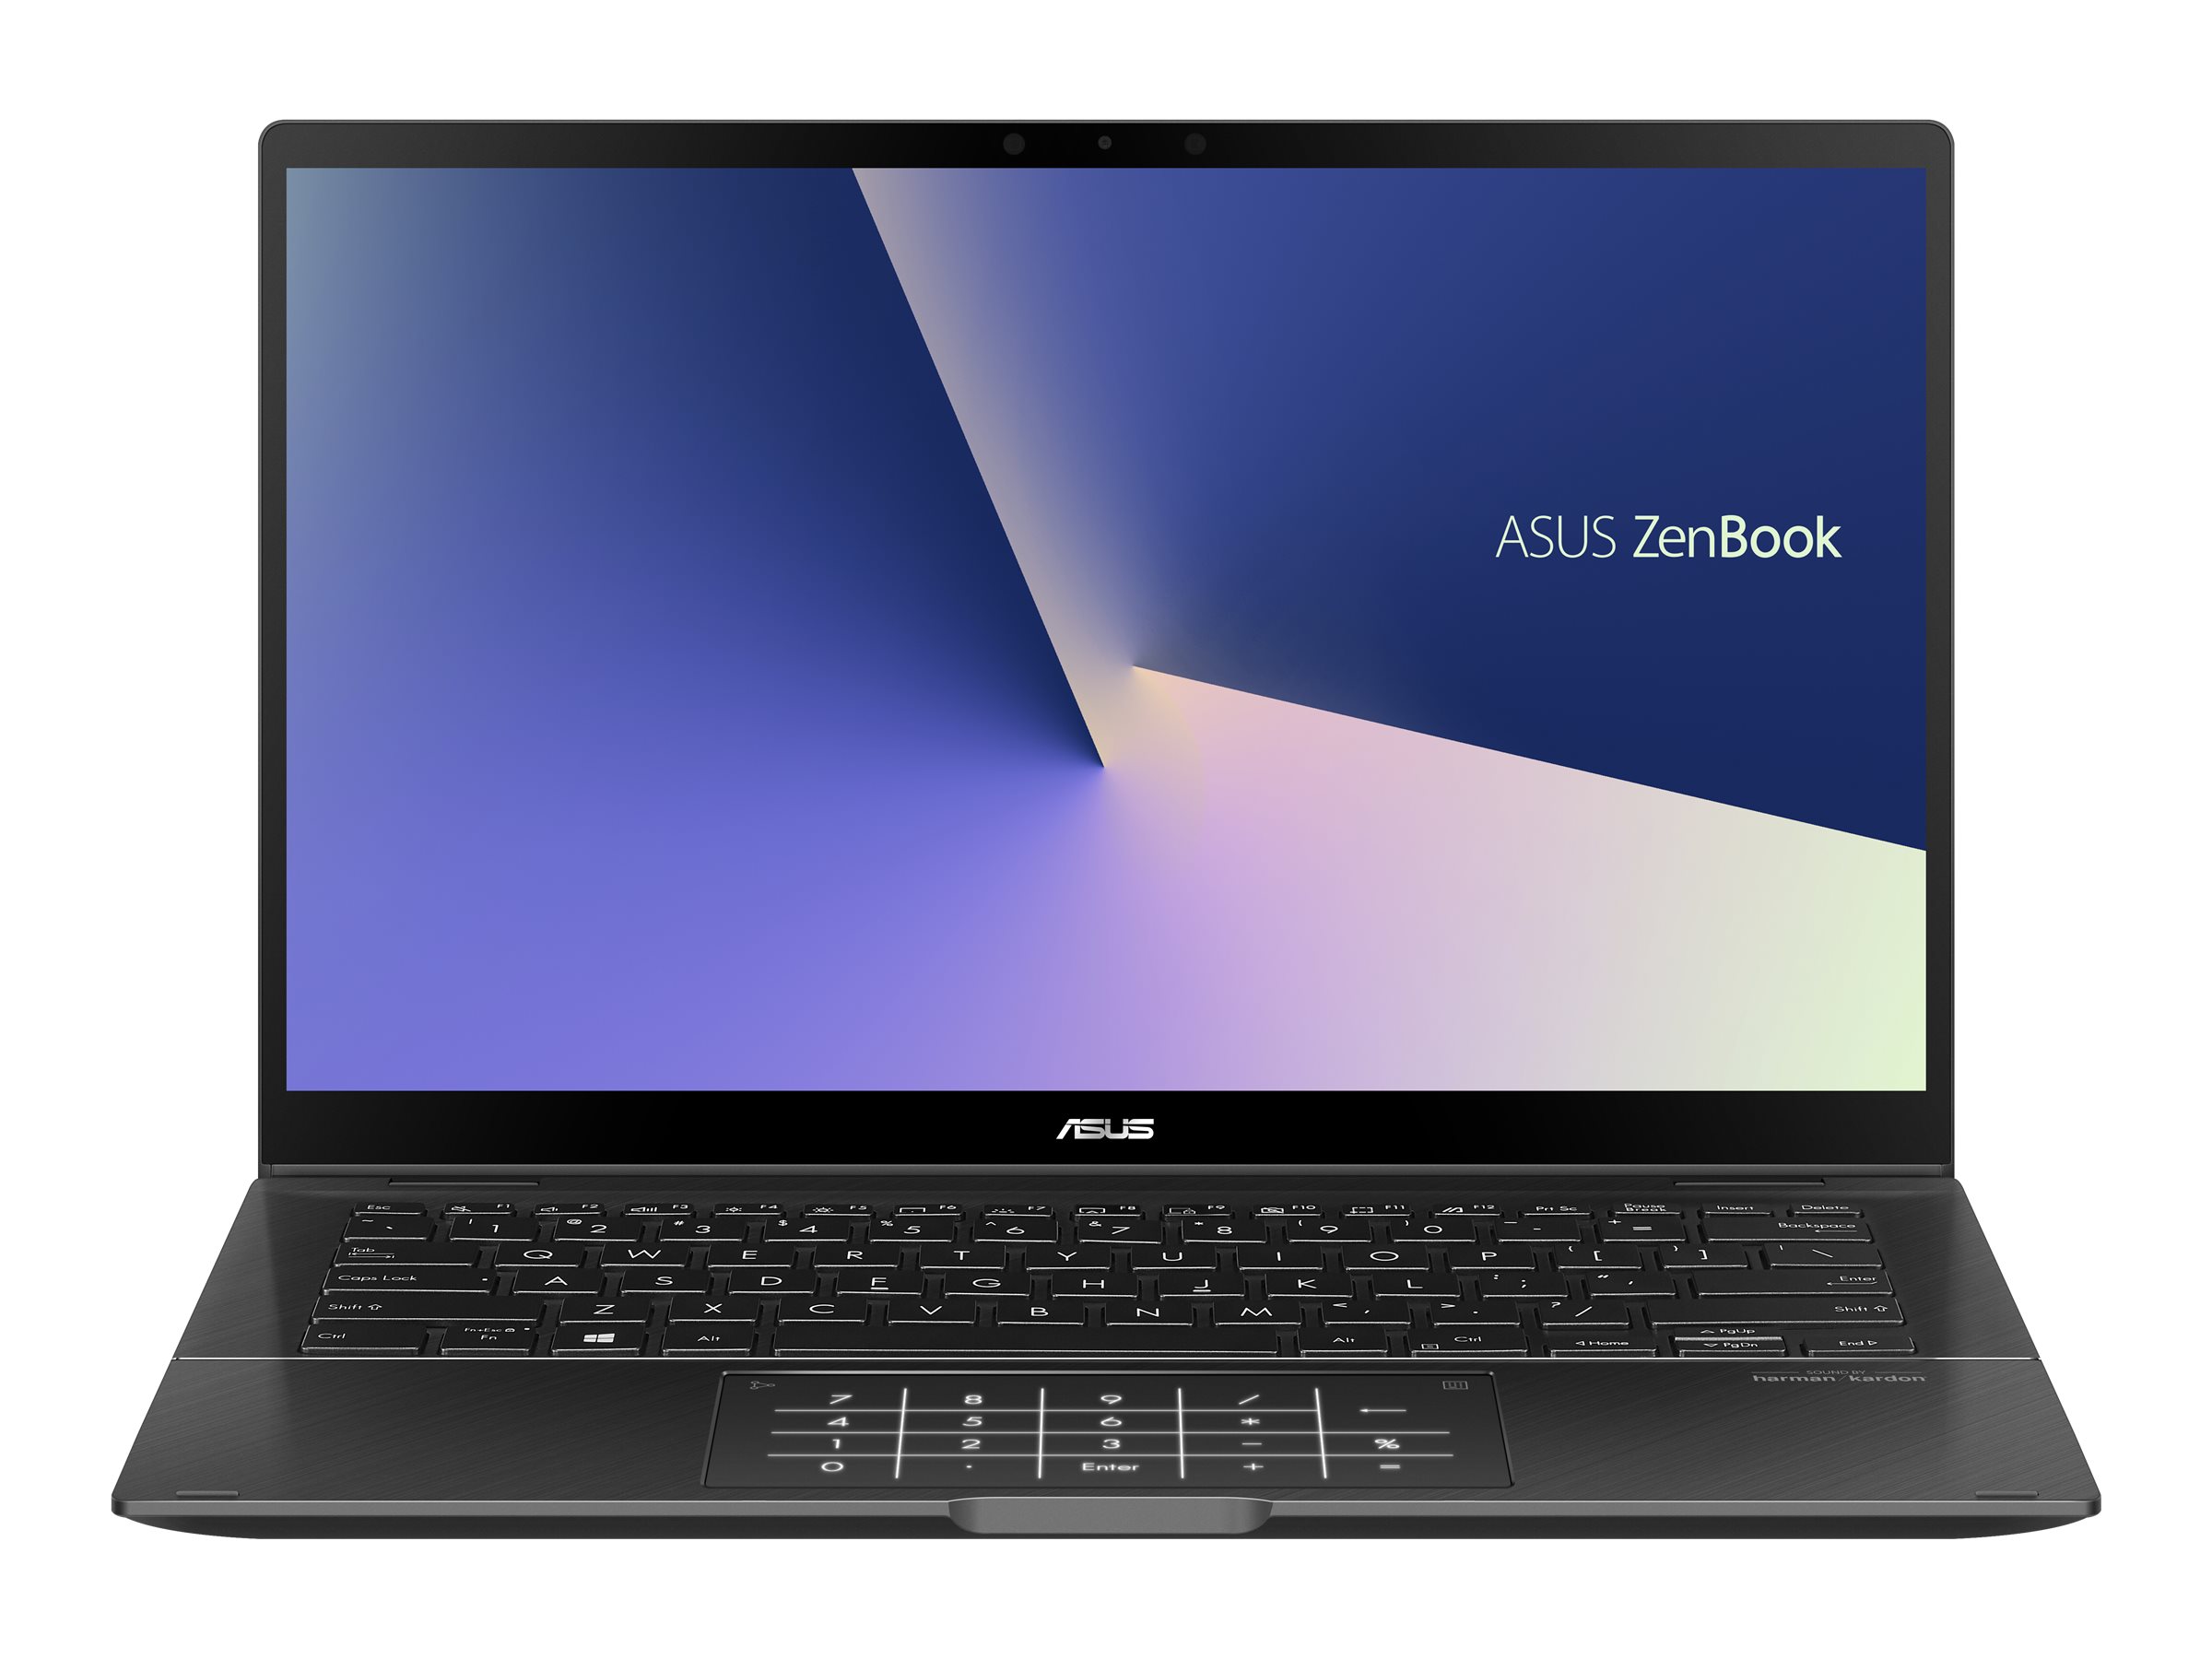 ASUS ZenBook Flip 14 (UX463FA) - full specs, details and review